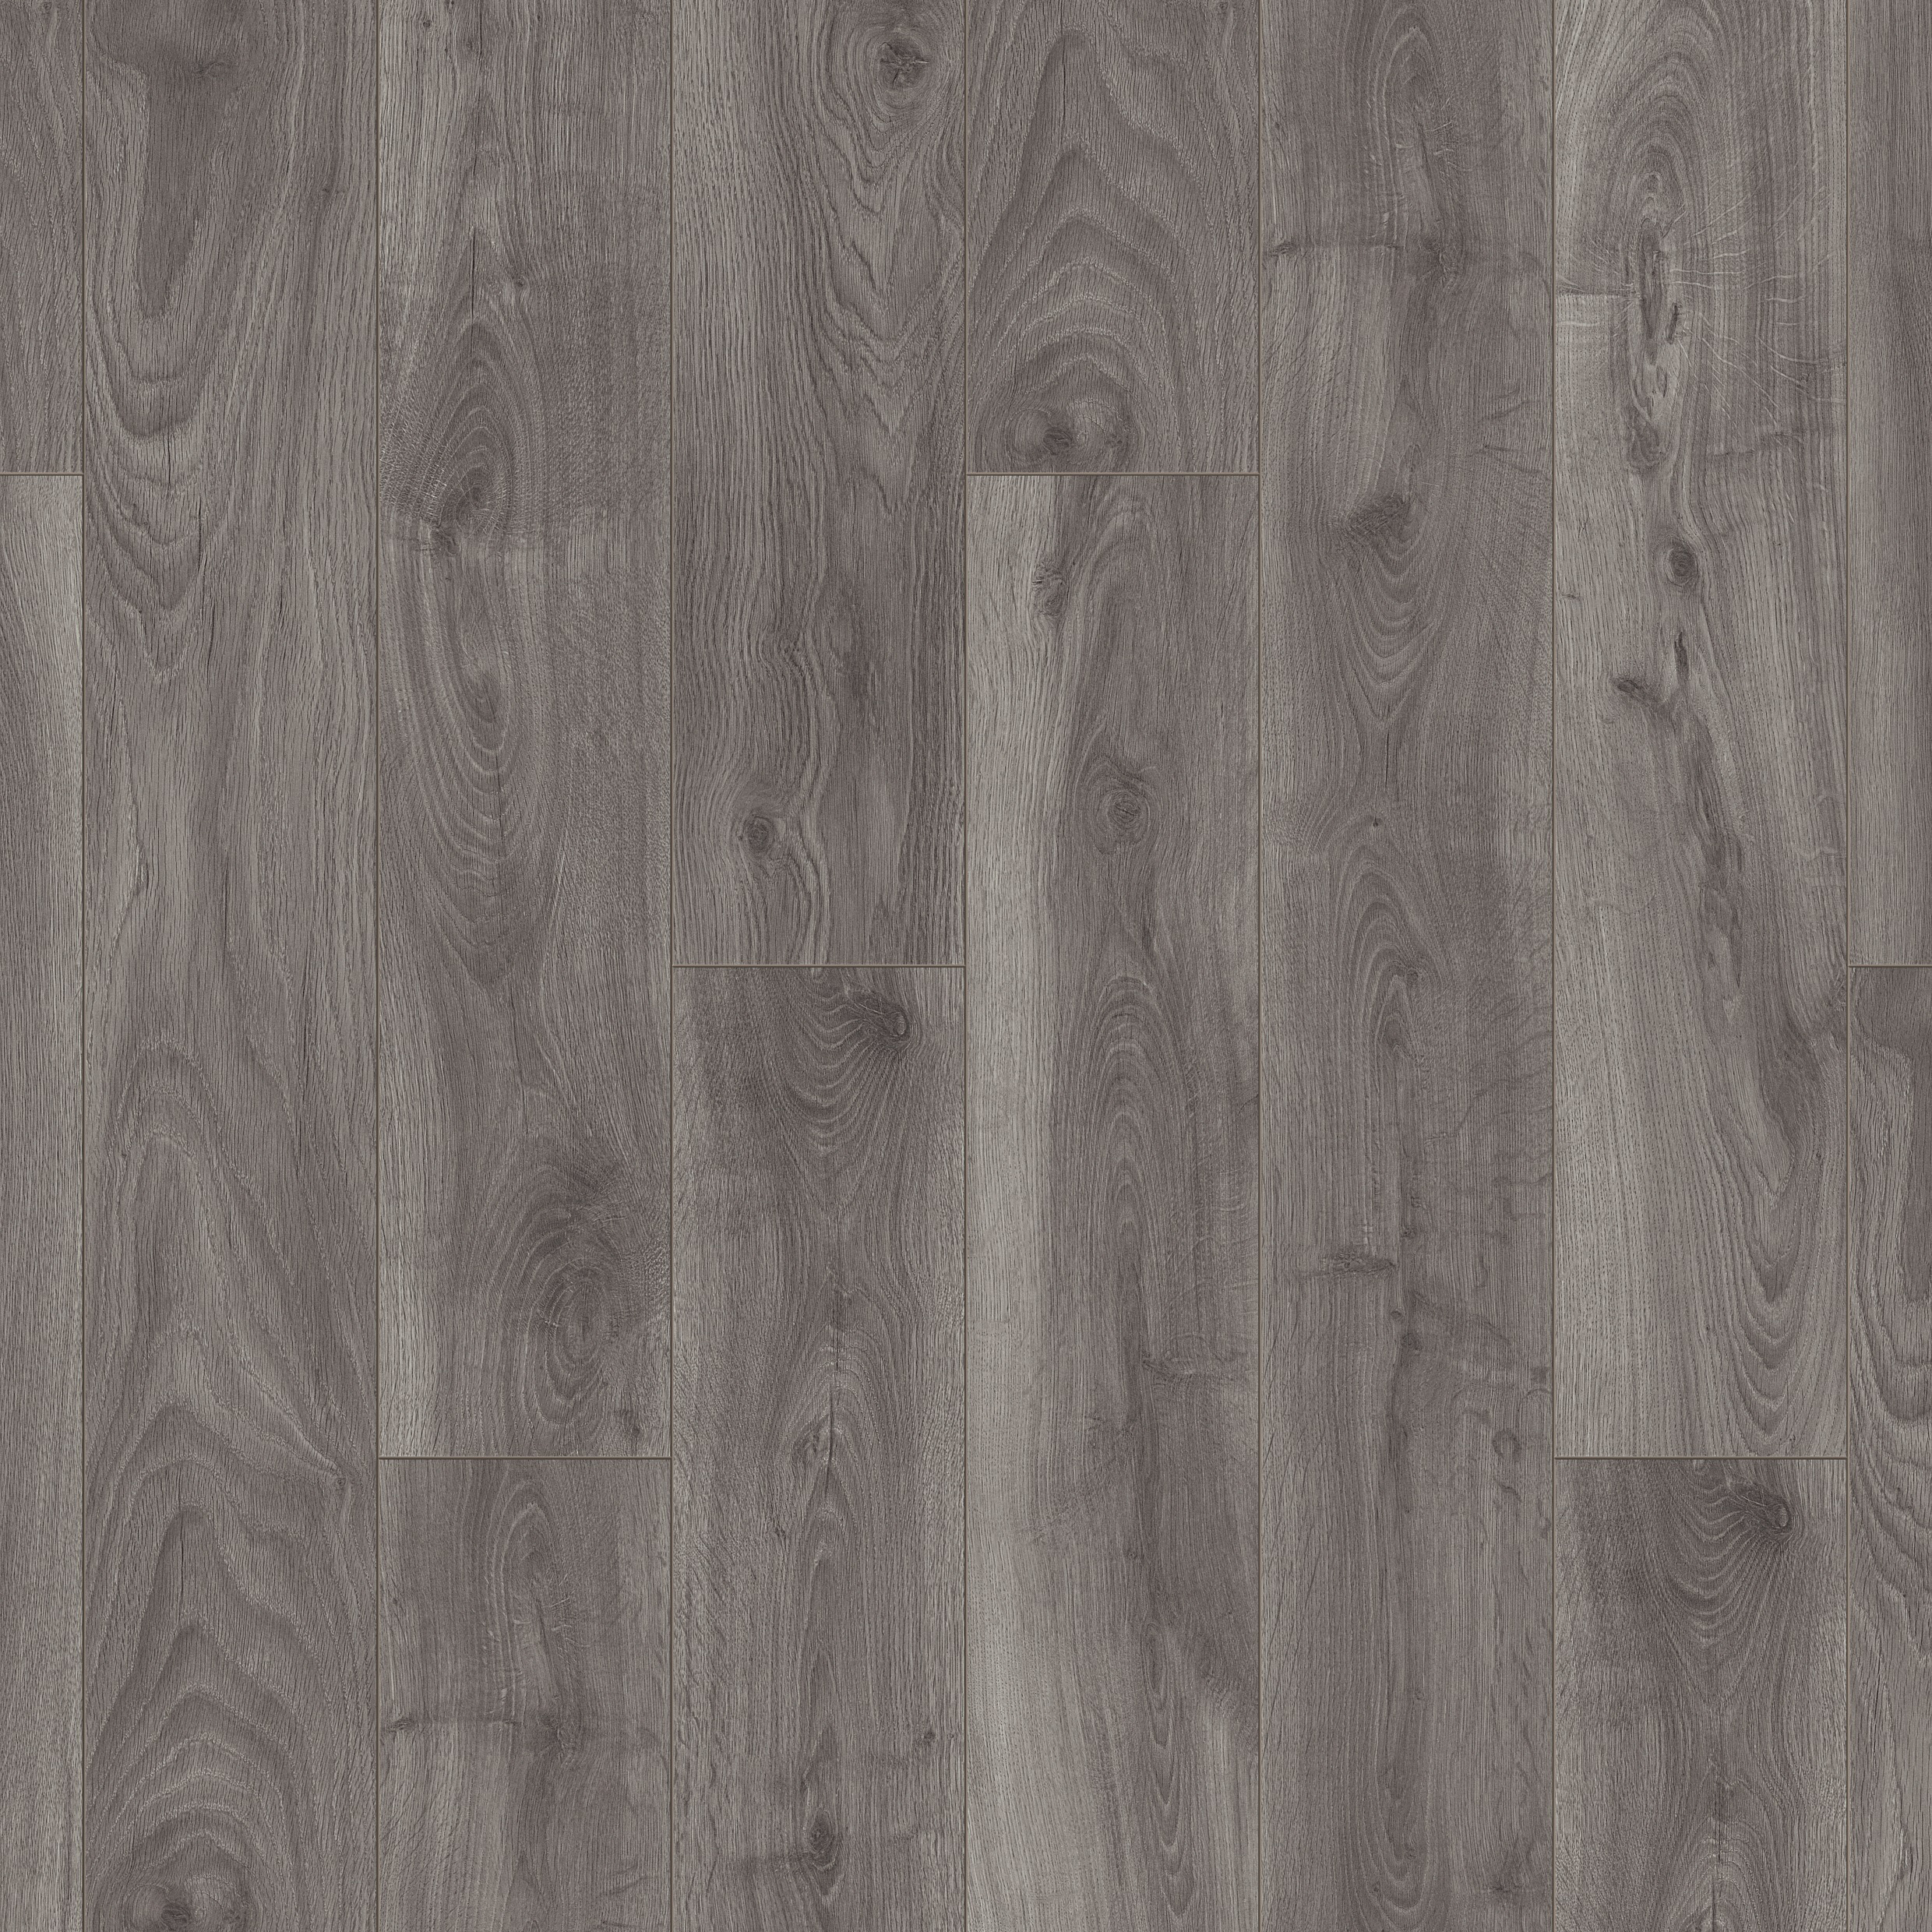 Image of Tomahawk Blue Grey Oak 8mm Laminate Flooring - 2.22m2